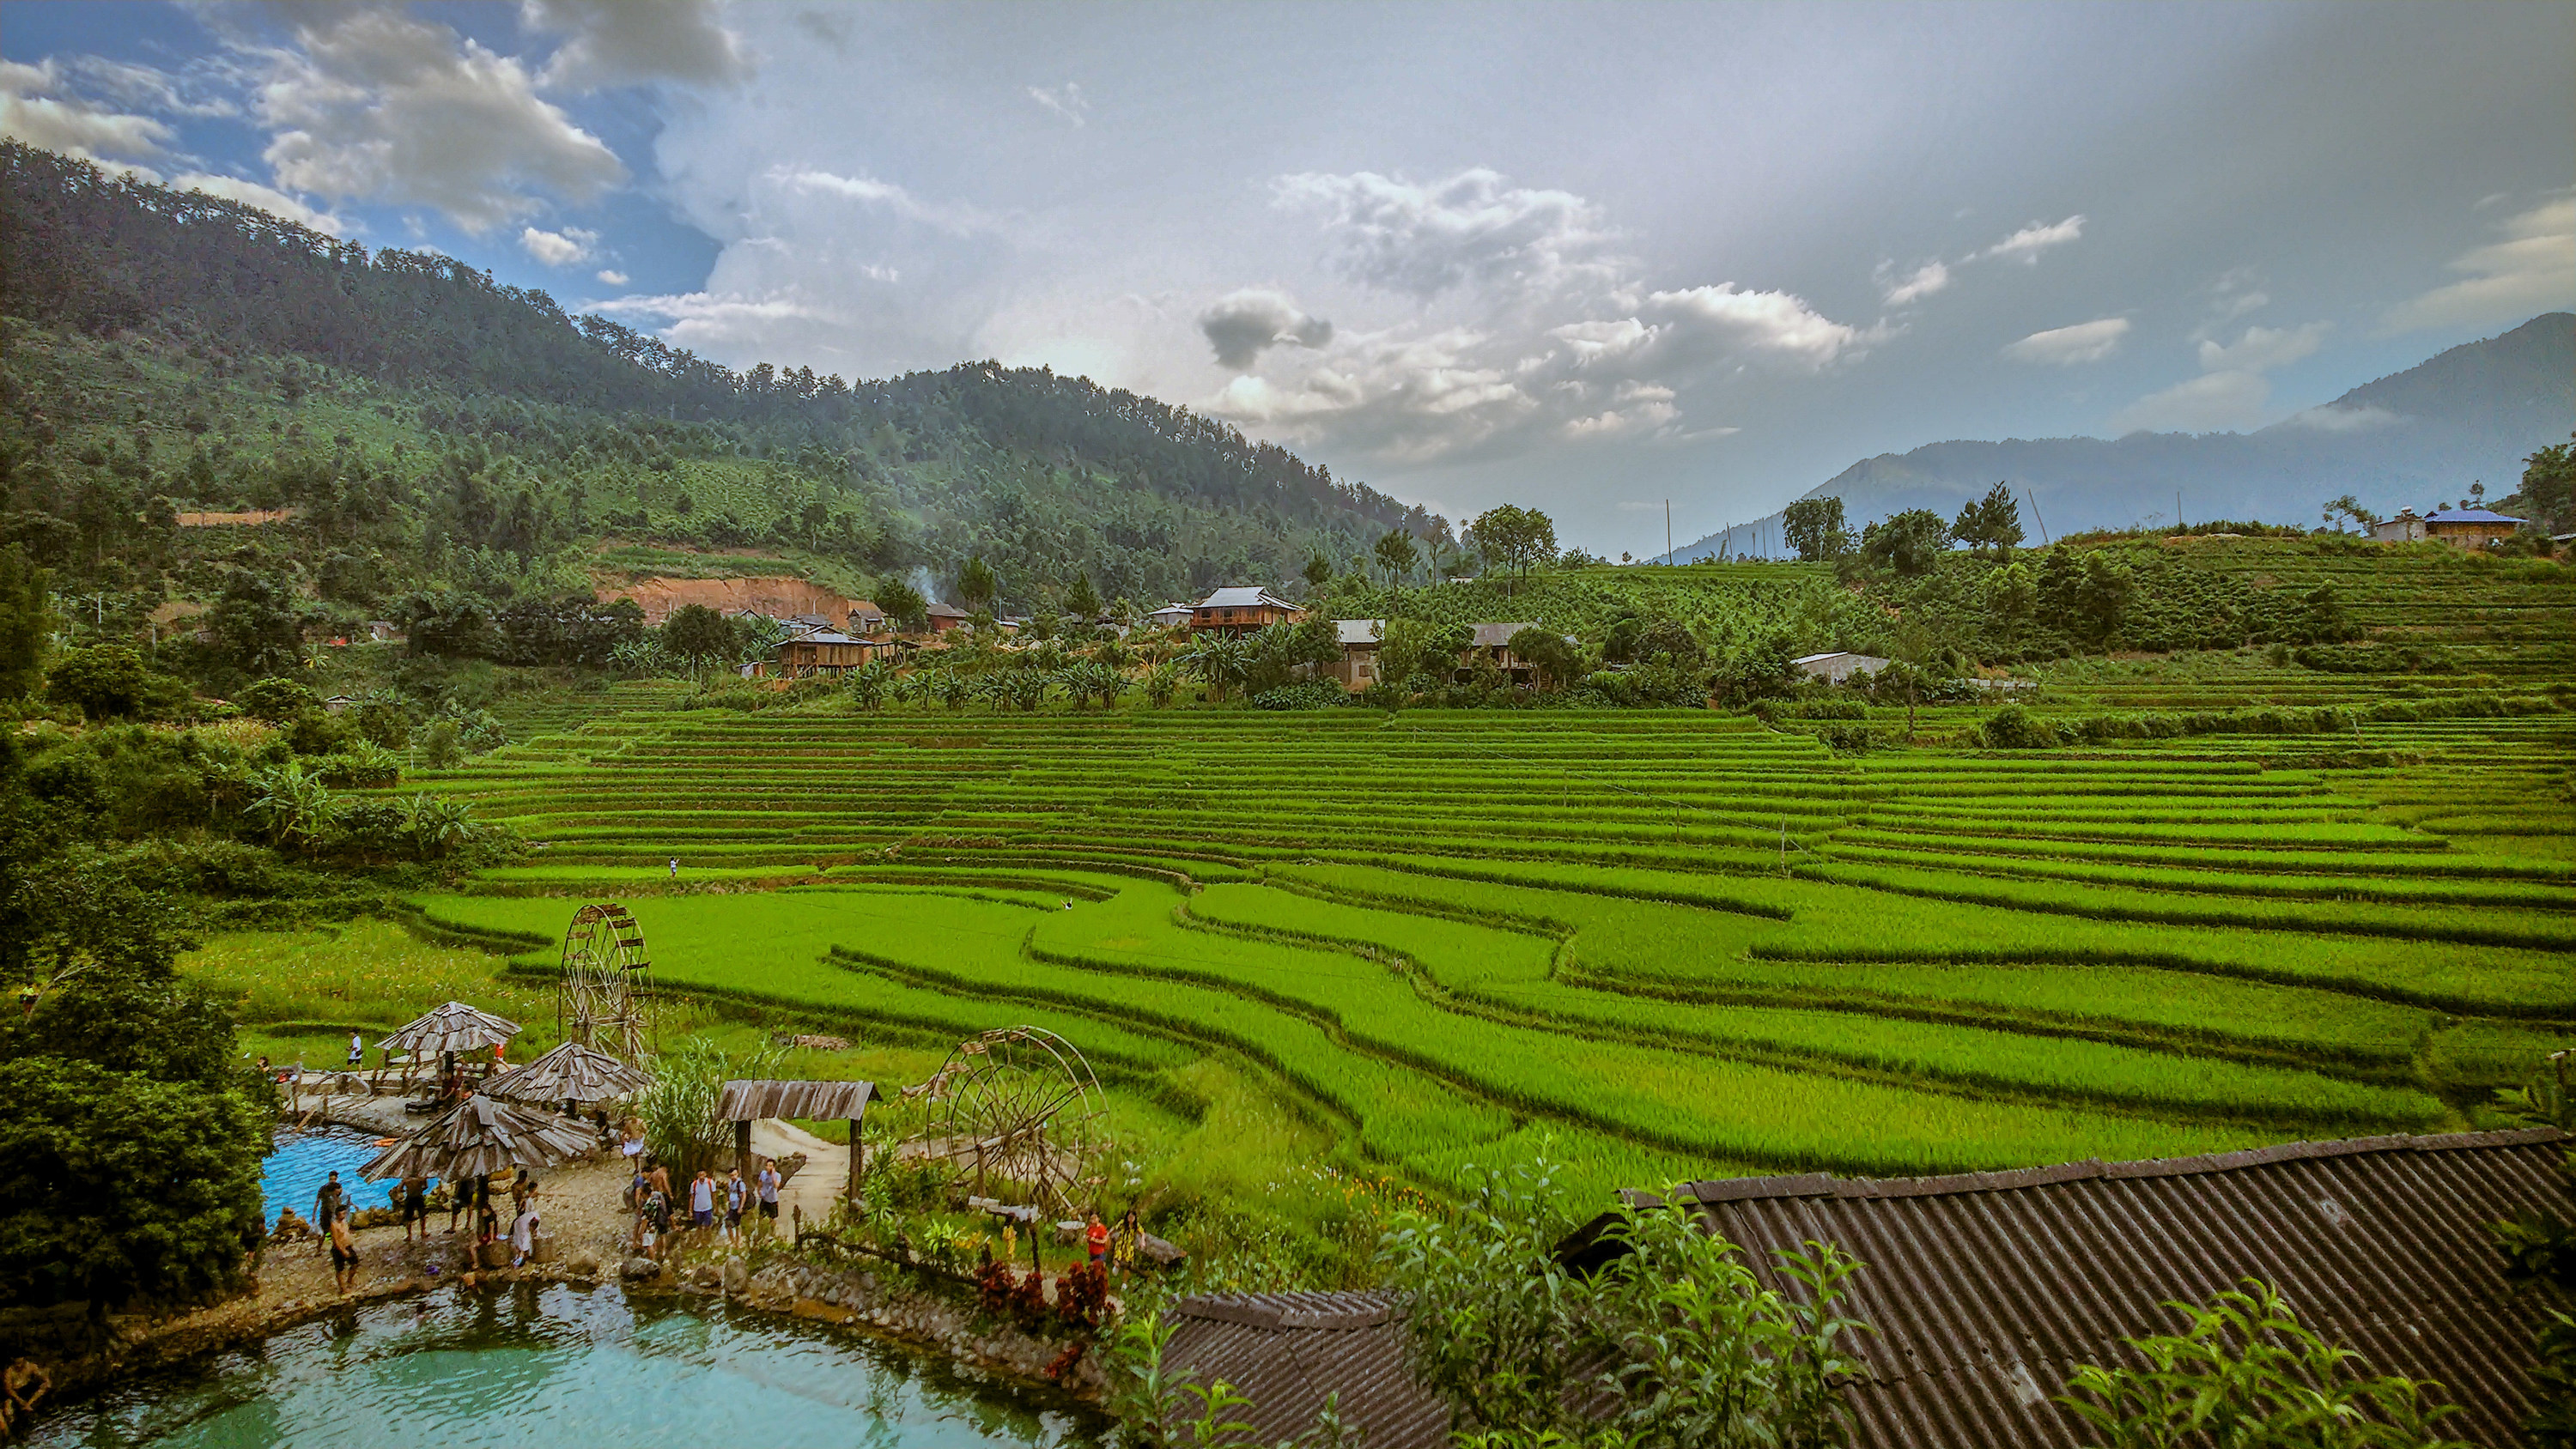 A beautiful view over lush green rice paddies